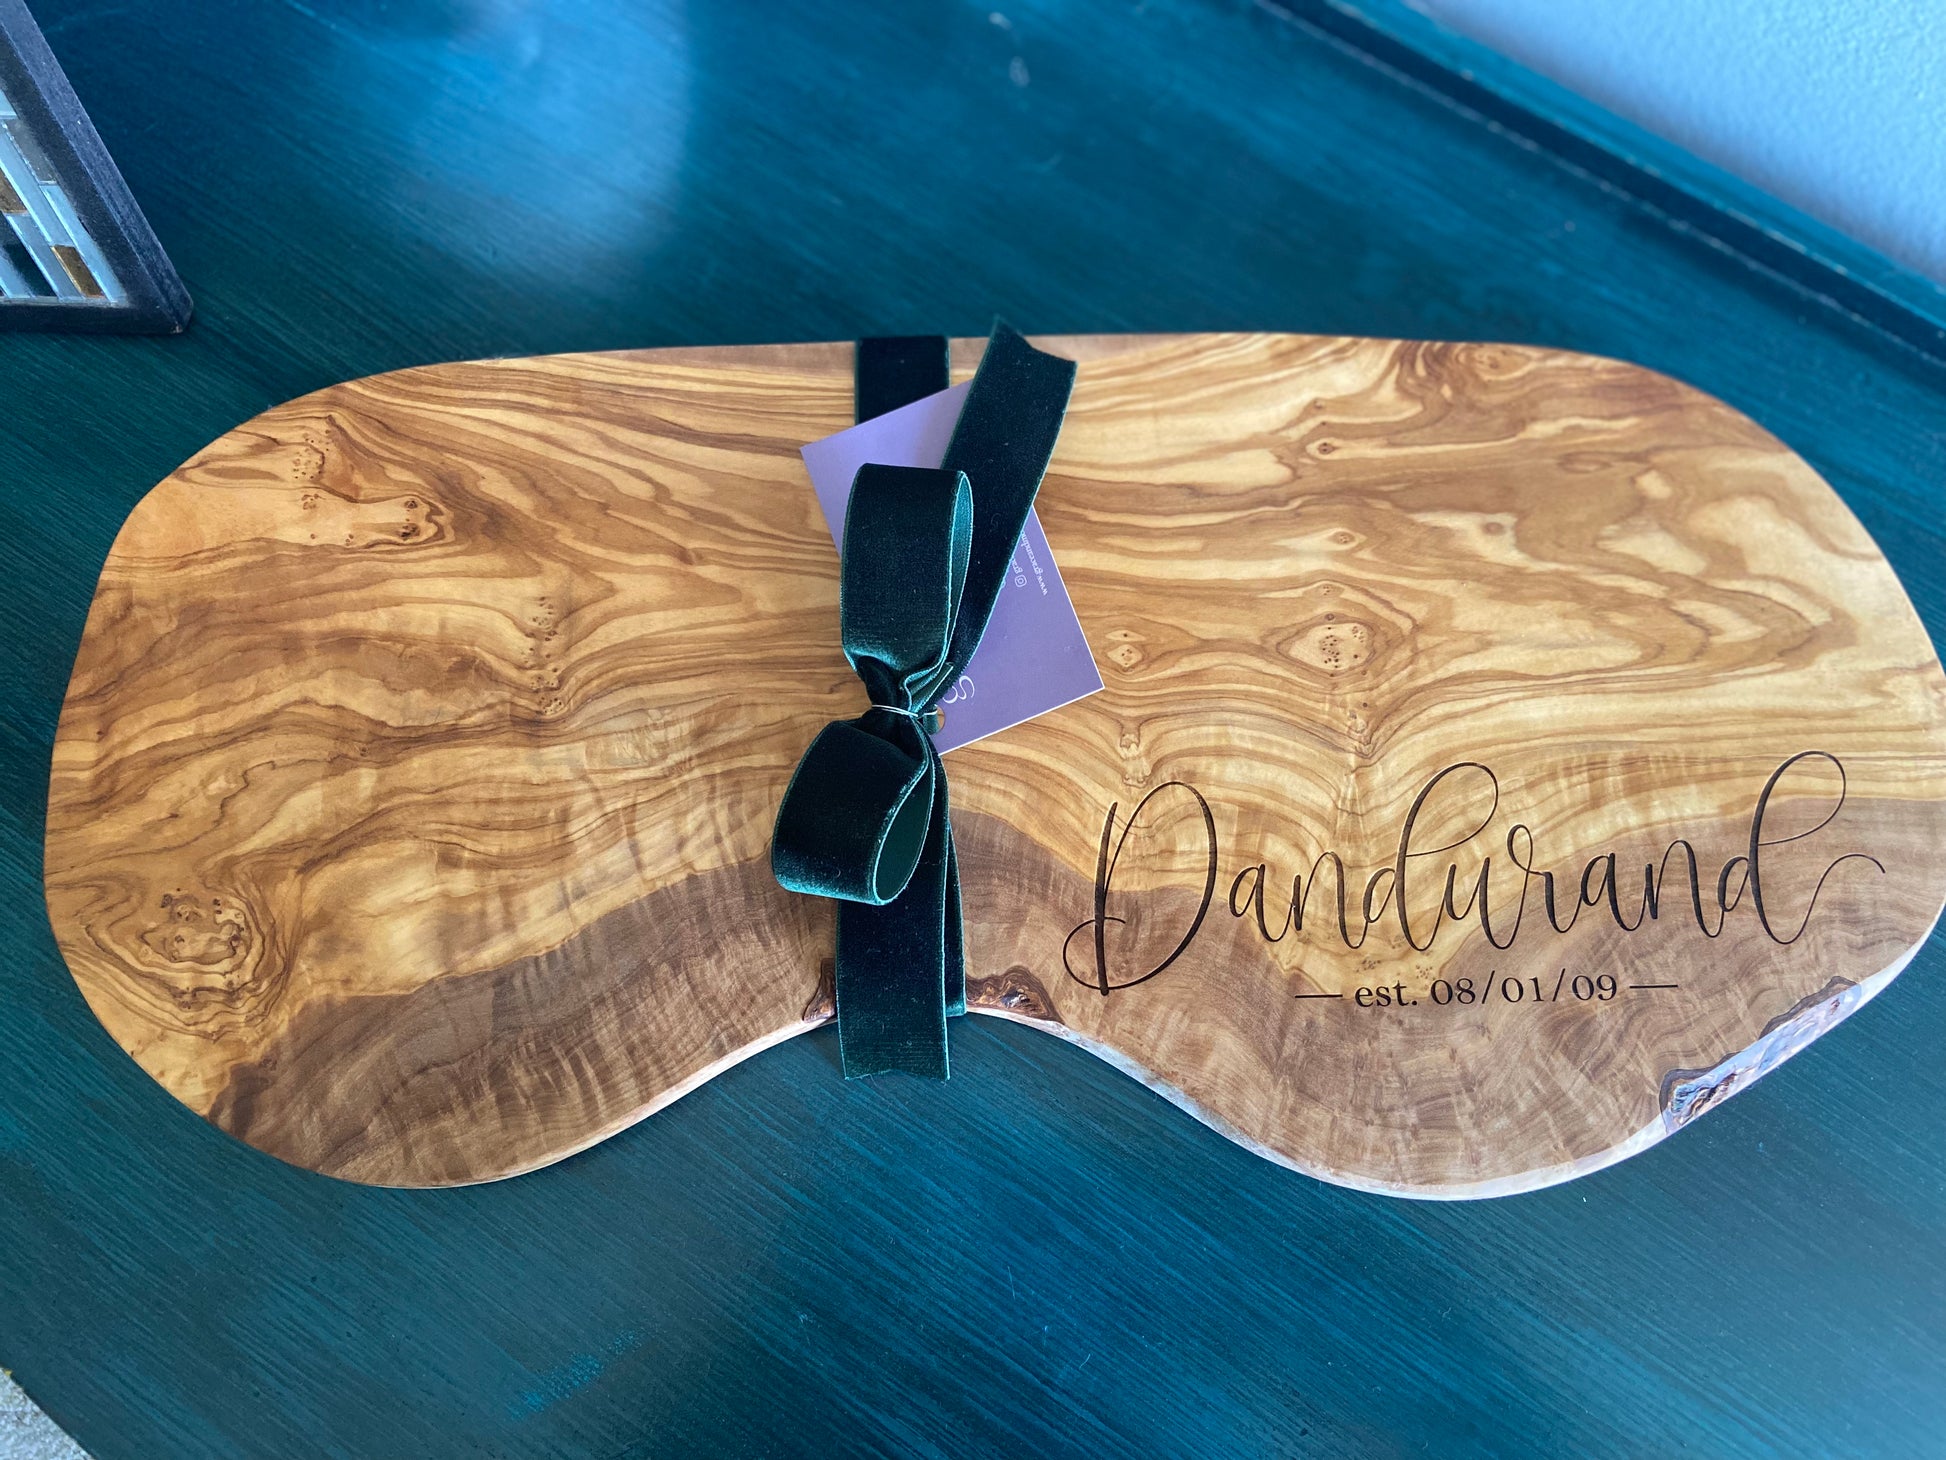 Olive Wood Paddle Board- Engraved Baroque - Charleston Wrap